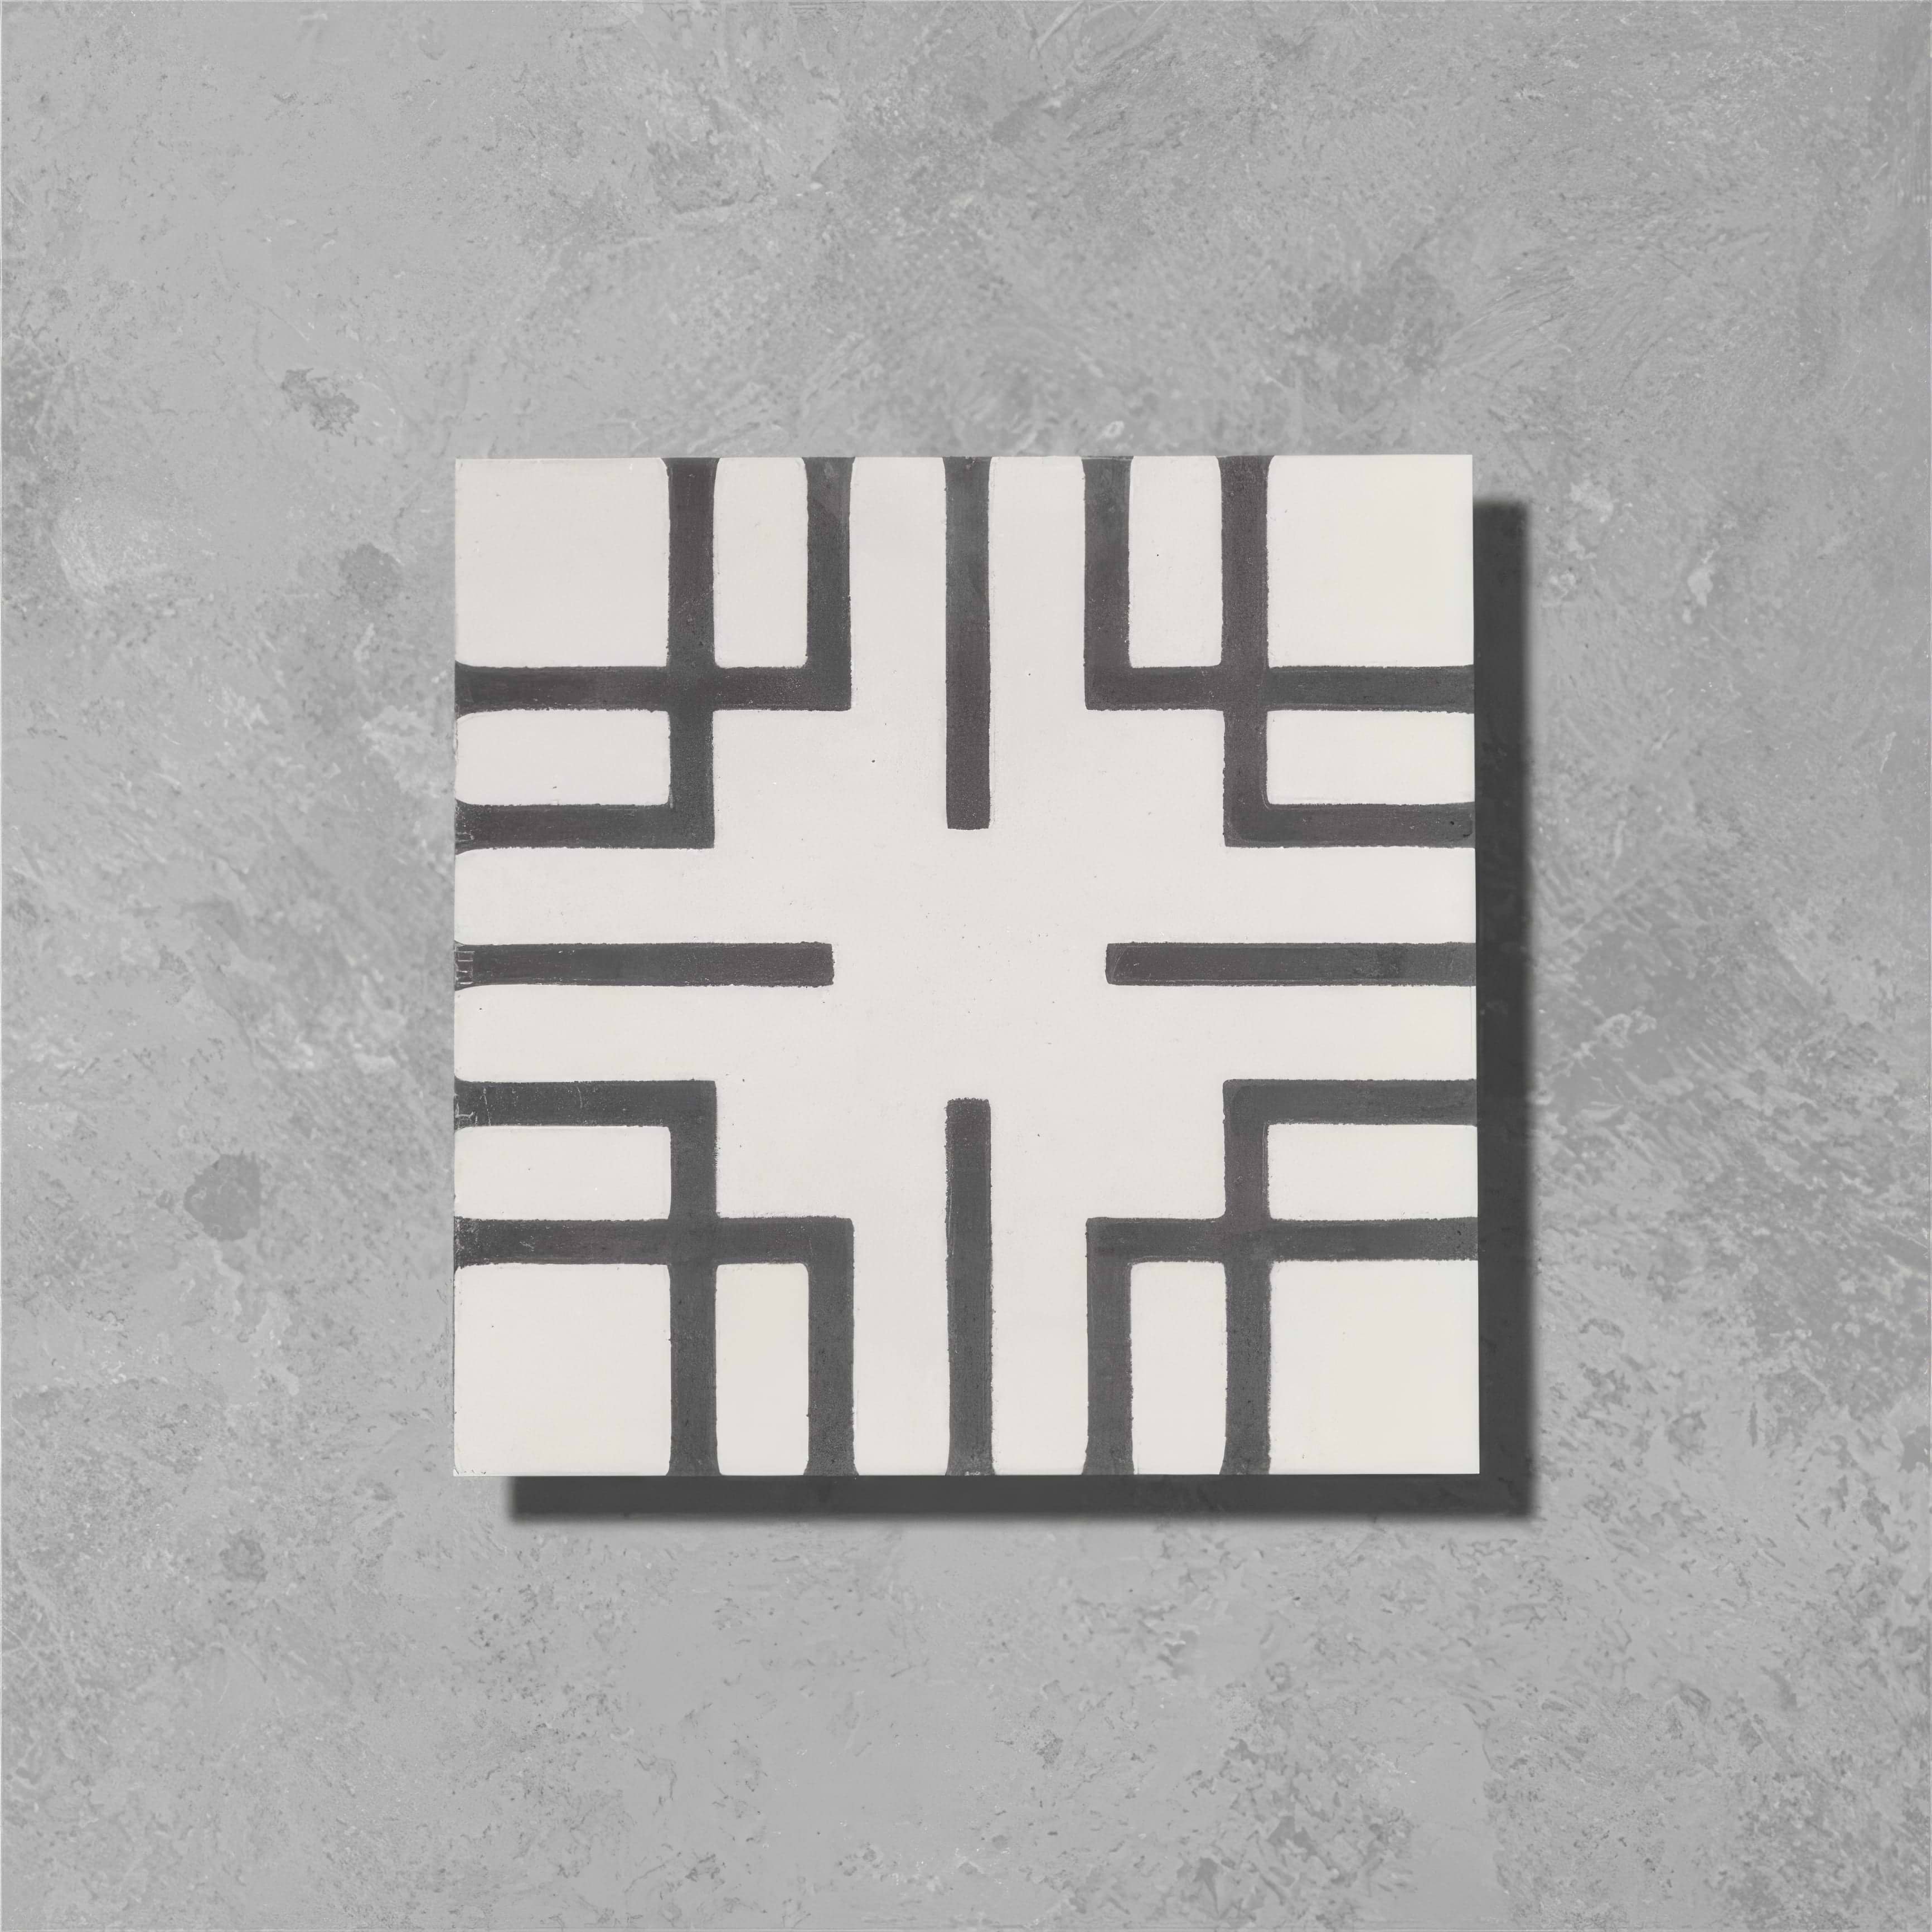 Old Iron Maze Five Tile - Hyperion Tiles